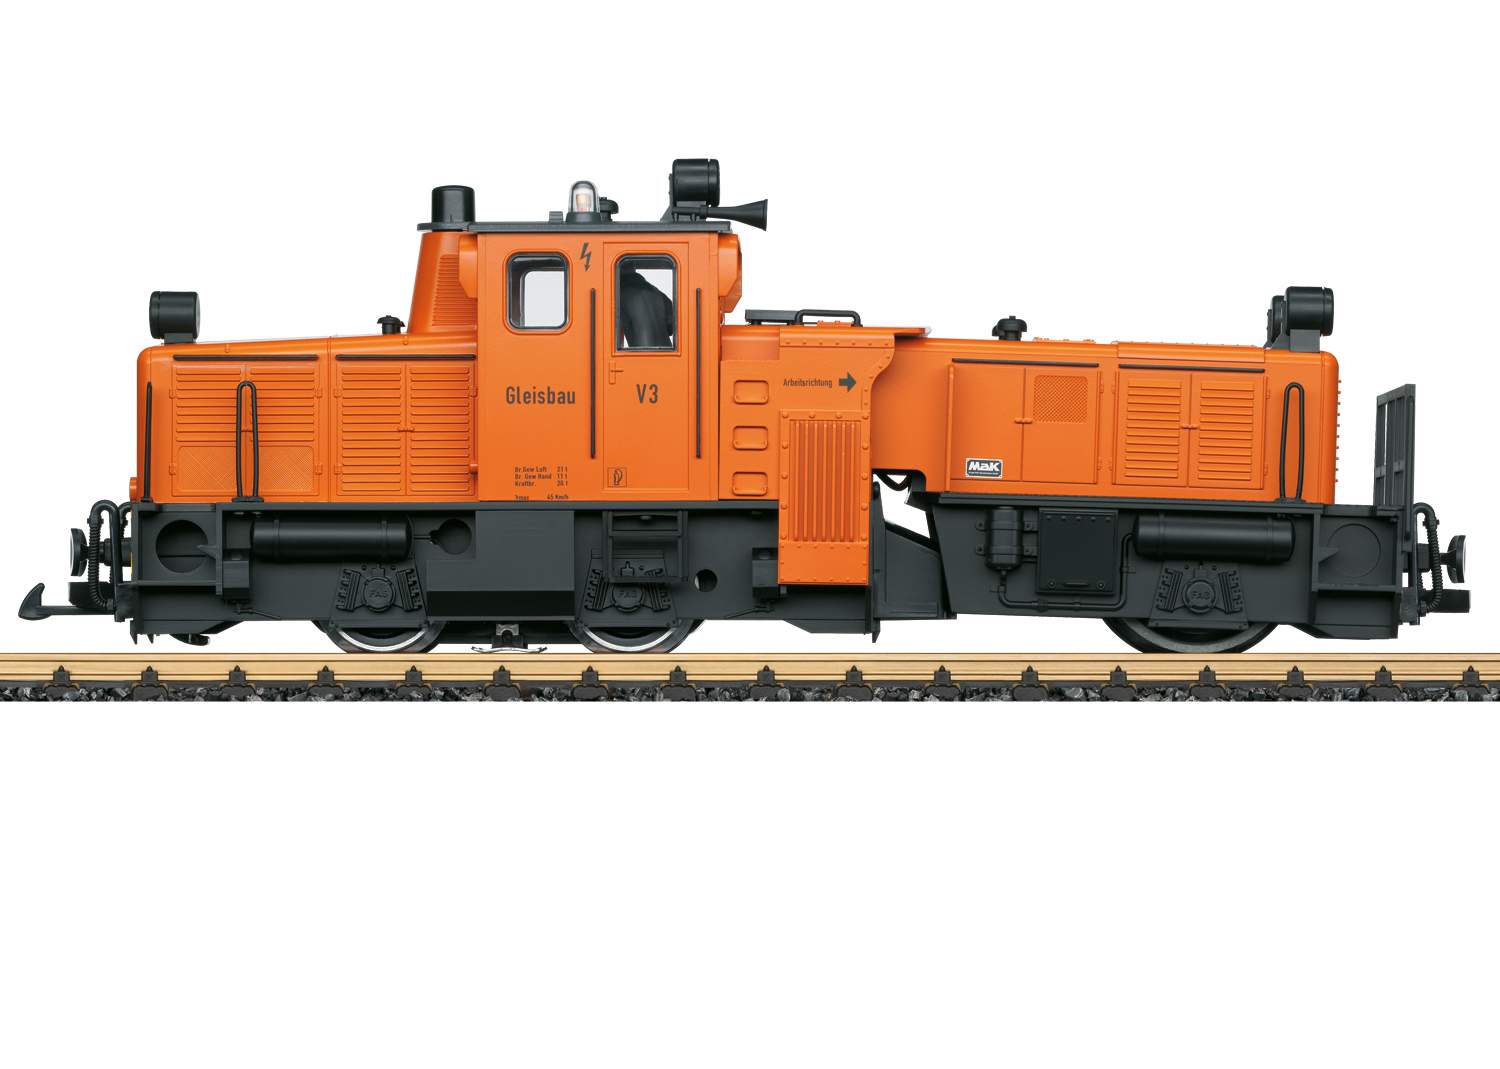 LGB G 21671 Track Cleaning Locomotive 2021 New Item